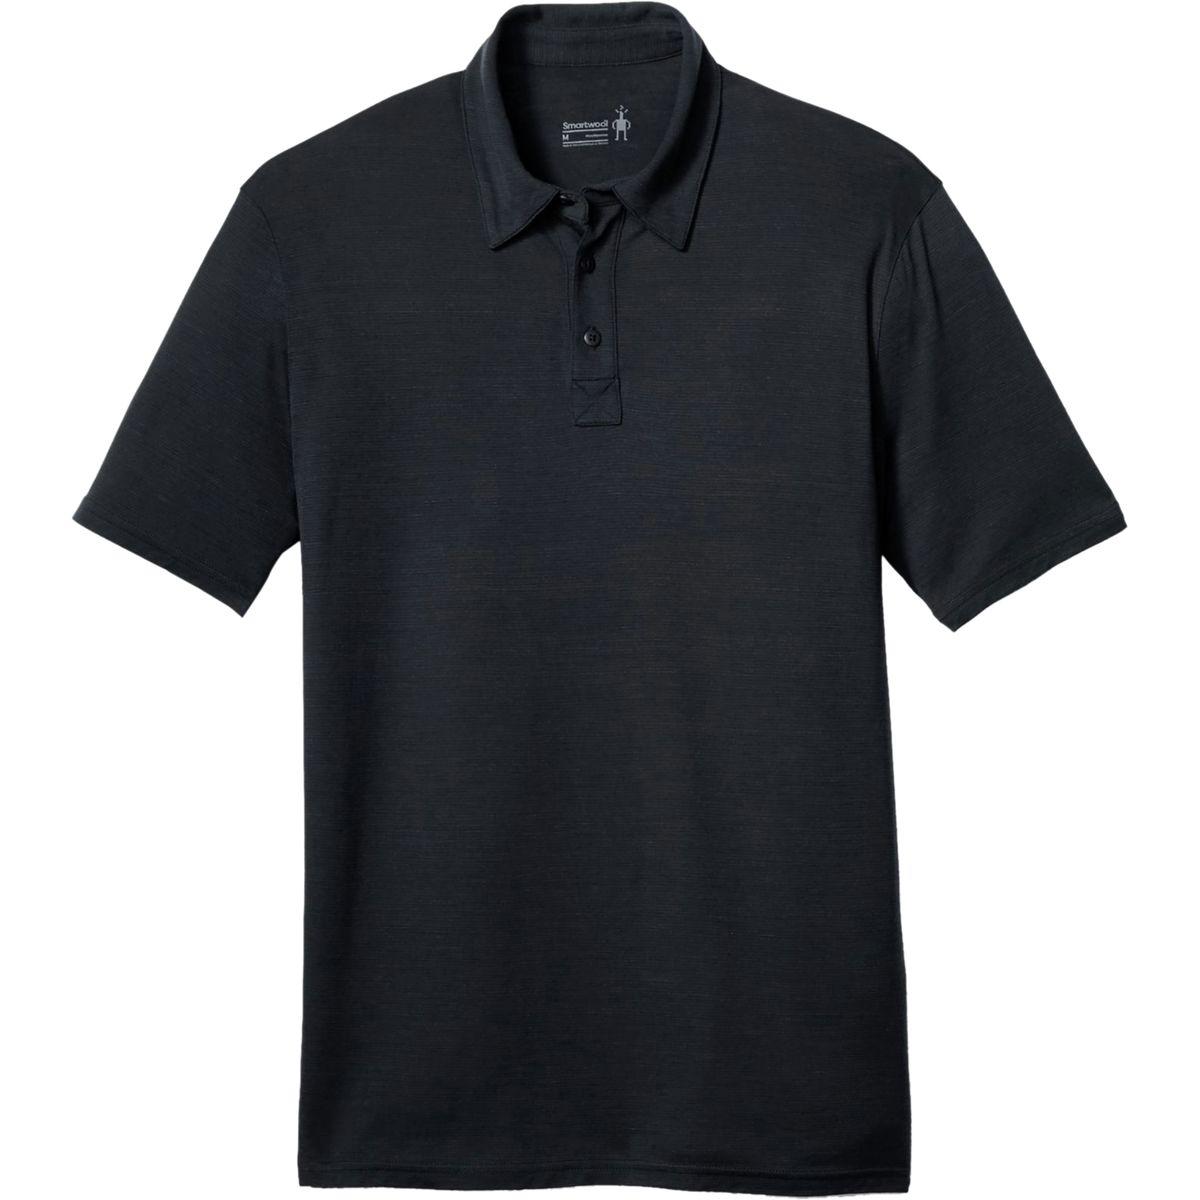 Smartwool Wool Merino 150 Pattern Polo Shirt for Men - Lyst